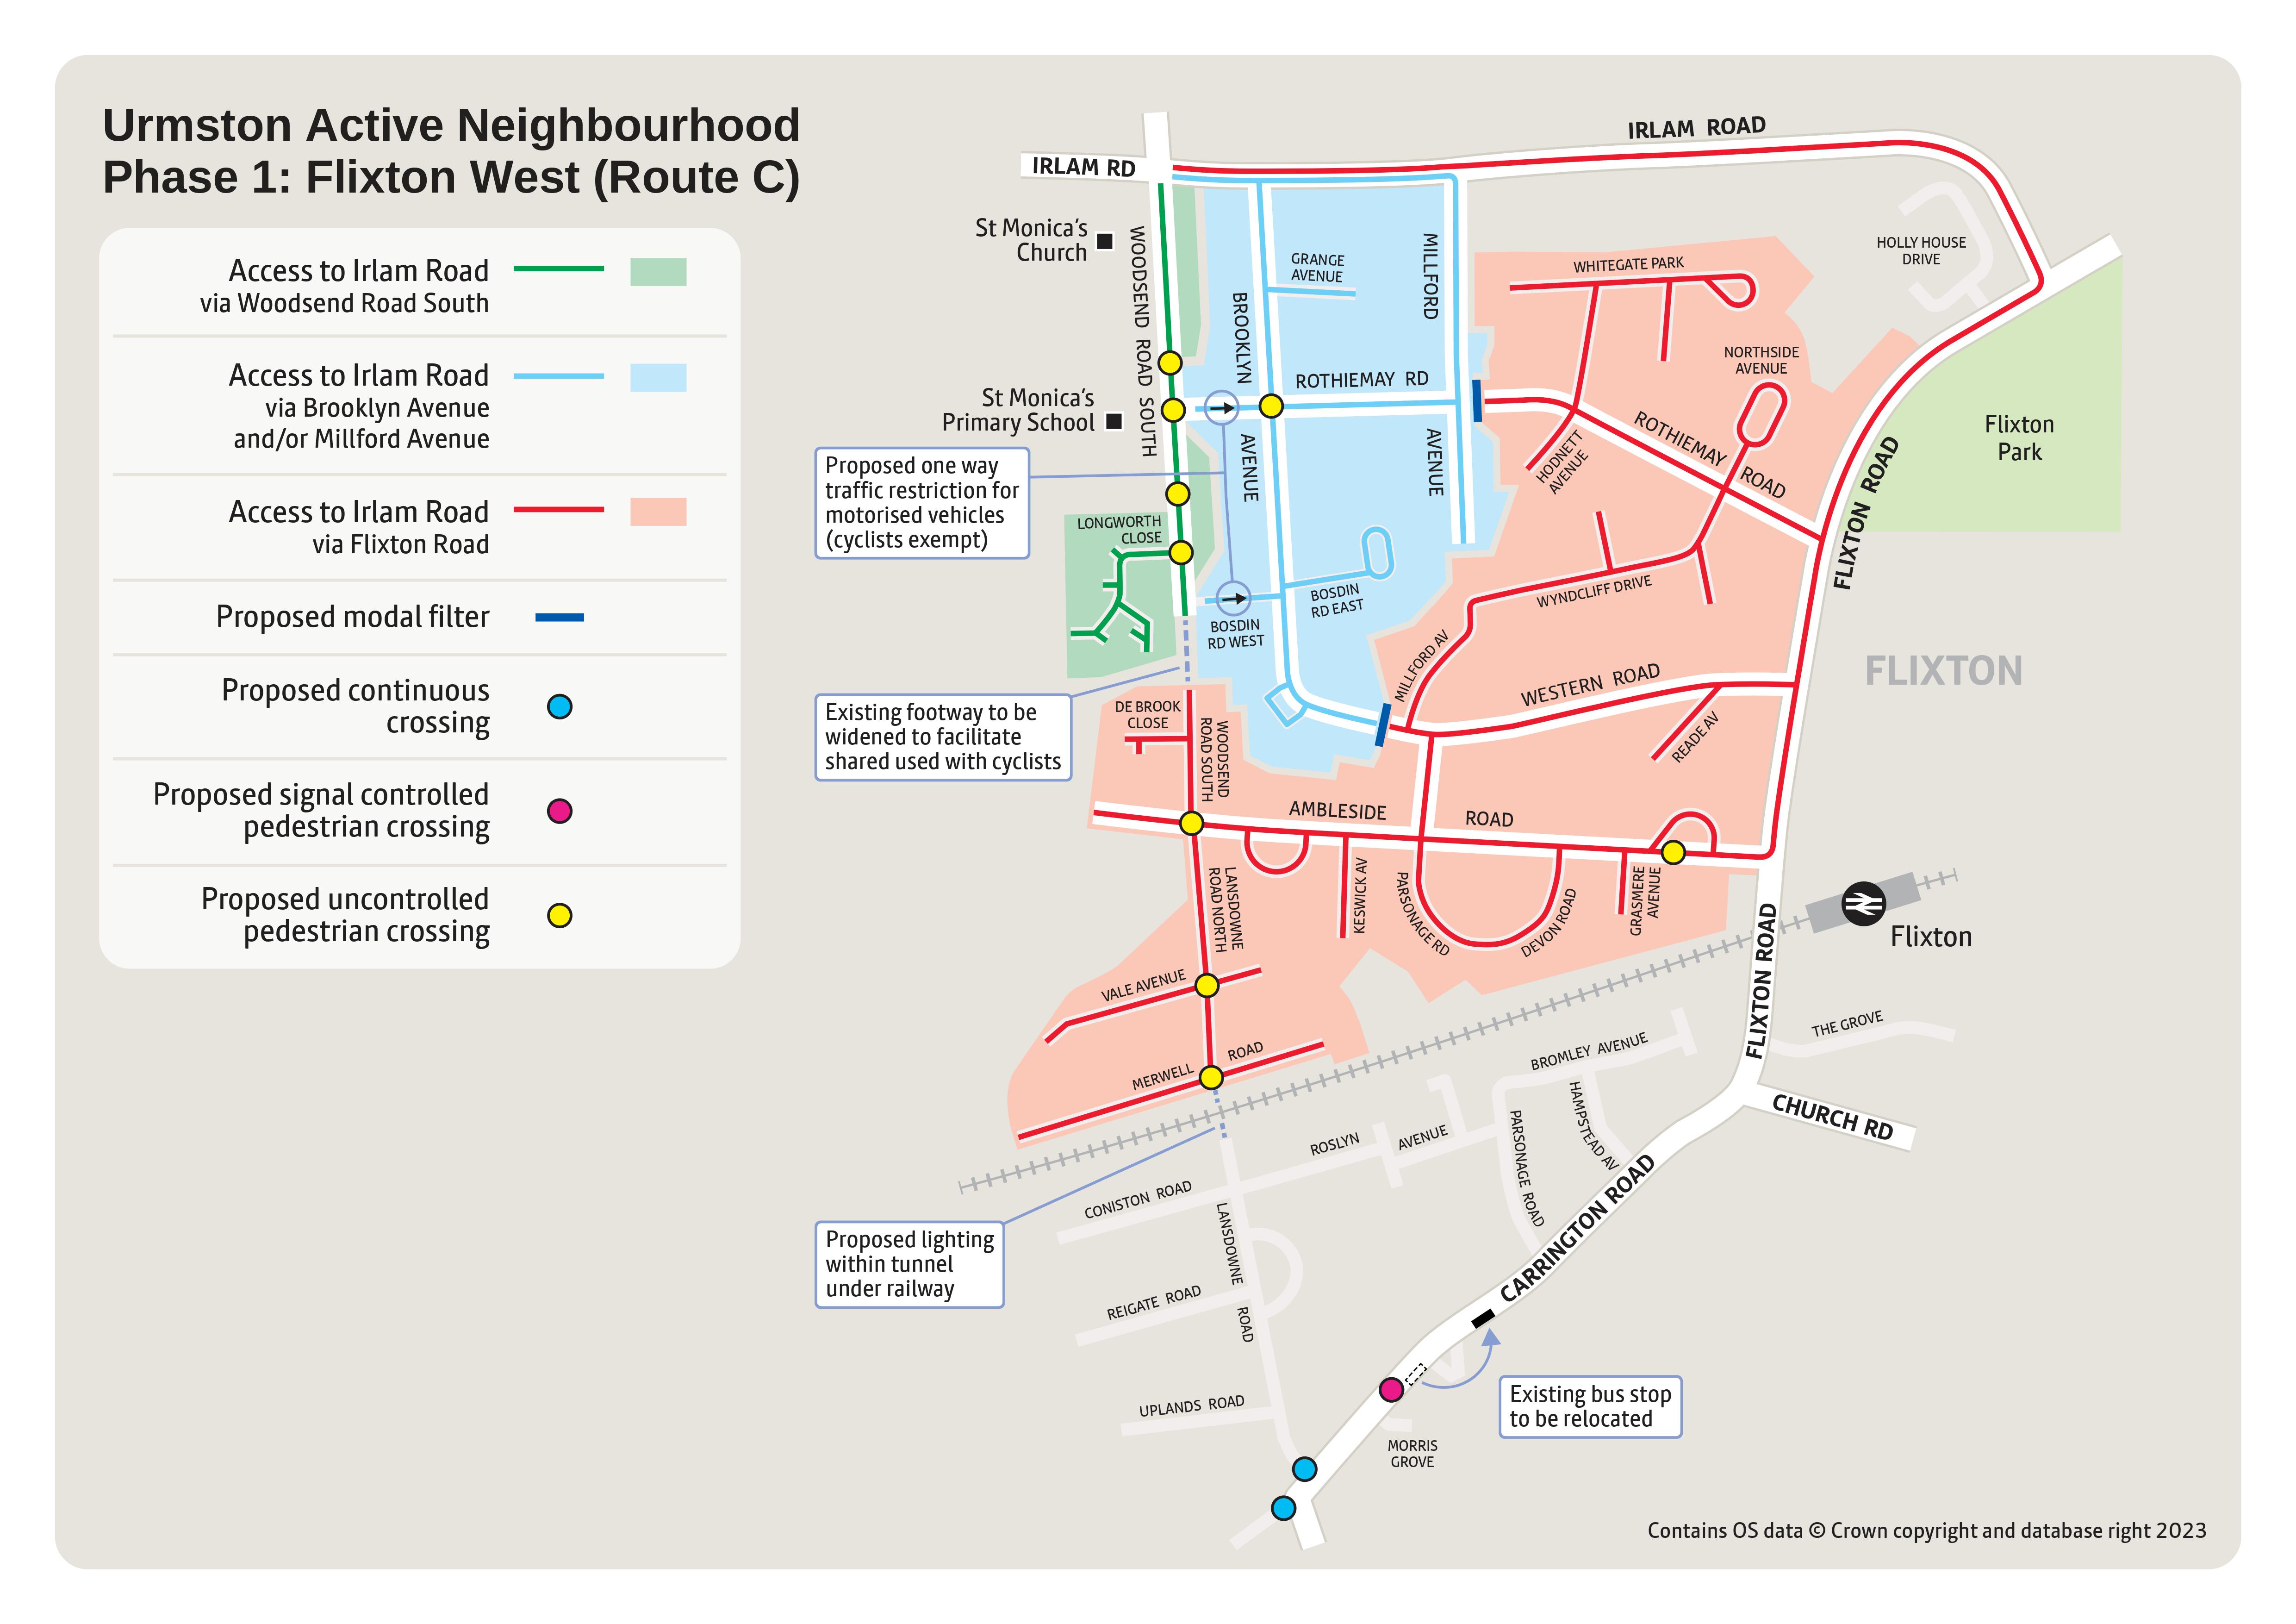 Flixton West Urmston Active Neighbourhood Phase 1 Route C